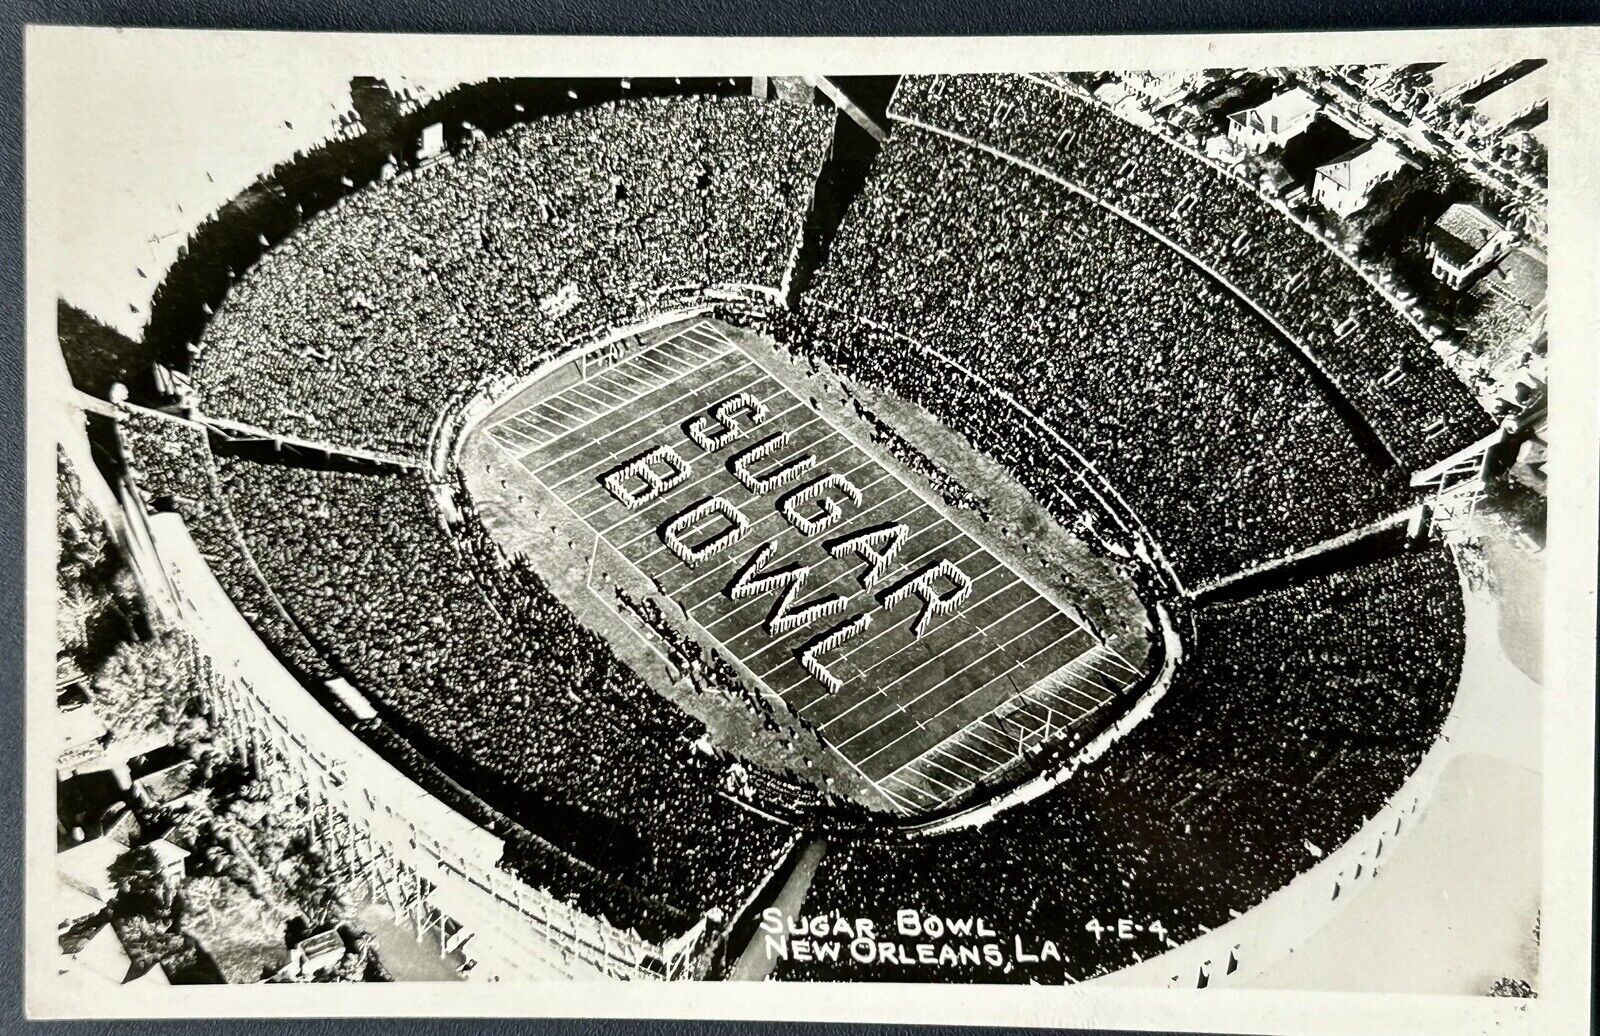 Tulane Stadium Sugar Bowl College Football. New Orleans Real Photo Postcard RPPC